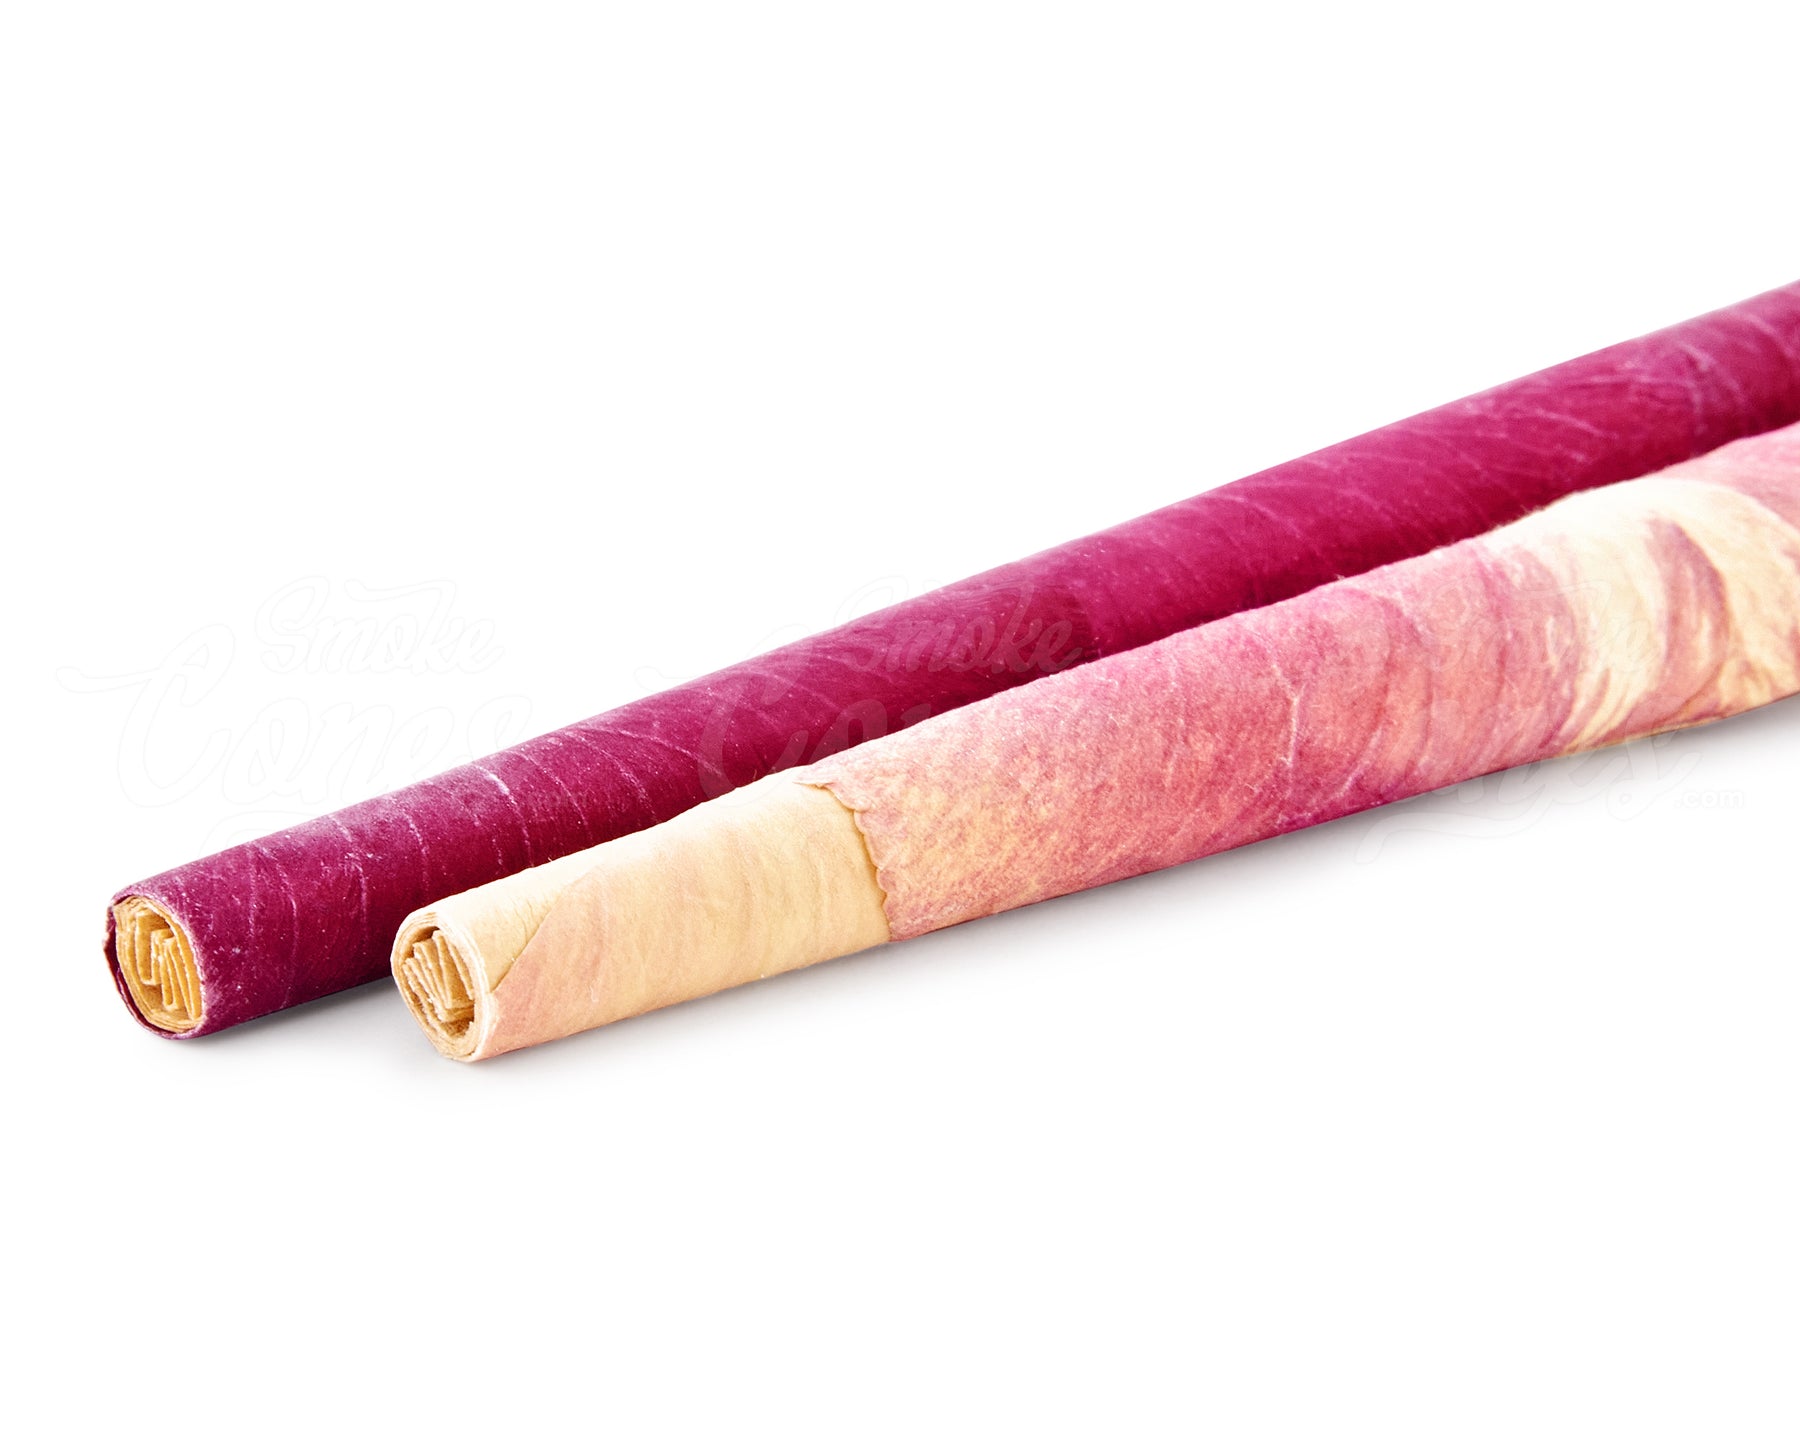 Rose Pedal Slim Wrap Rolls, 3 Blunt Wraps + Packing Tool